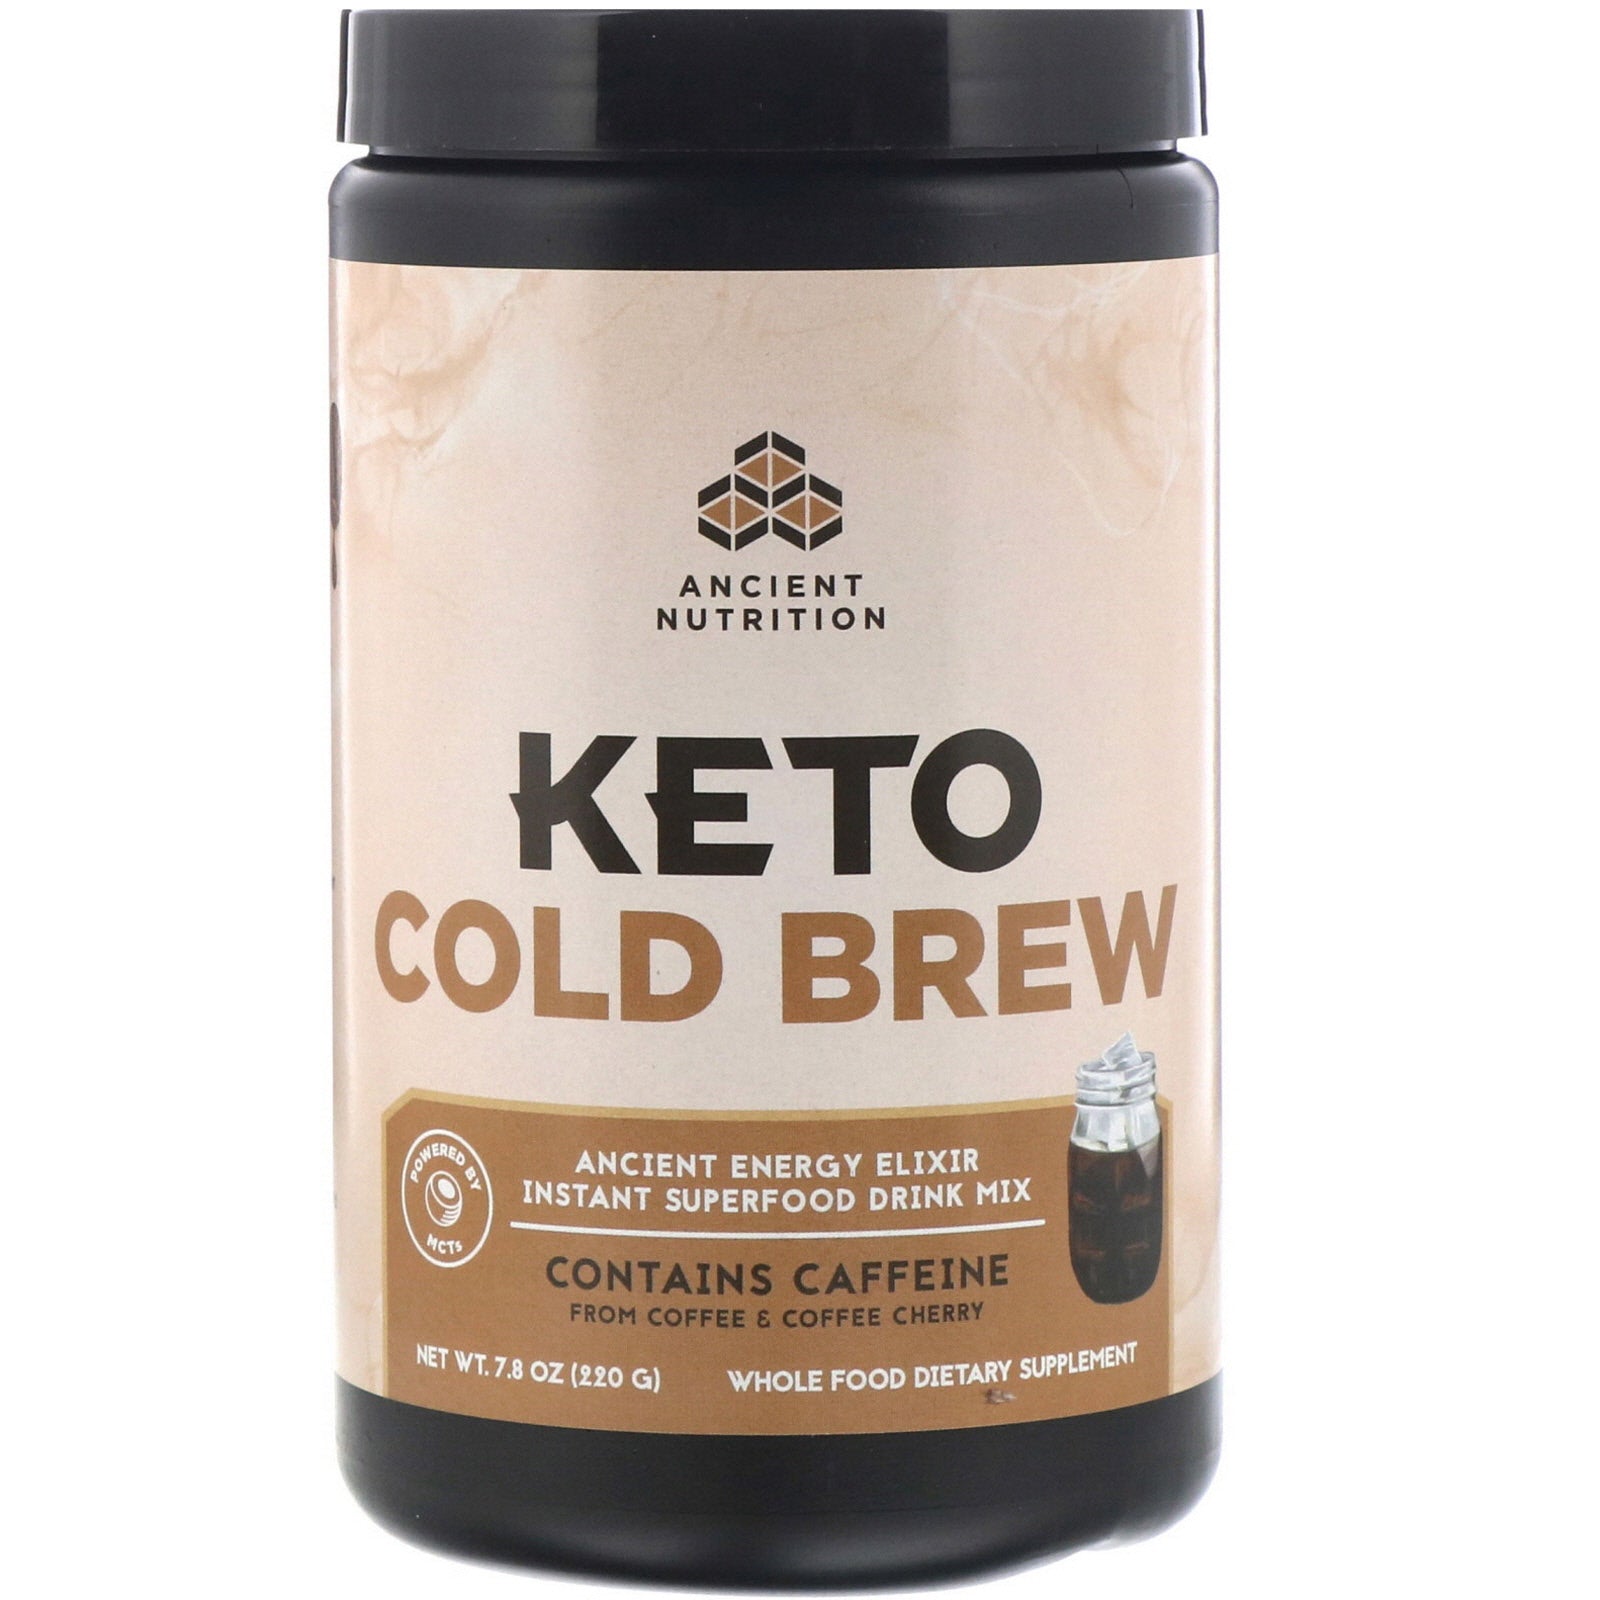 Dr. Axe / Ancient Nutrition, Keto Cold Brew, Ancient Energy Elixir, 7.8 oz (220 g)